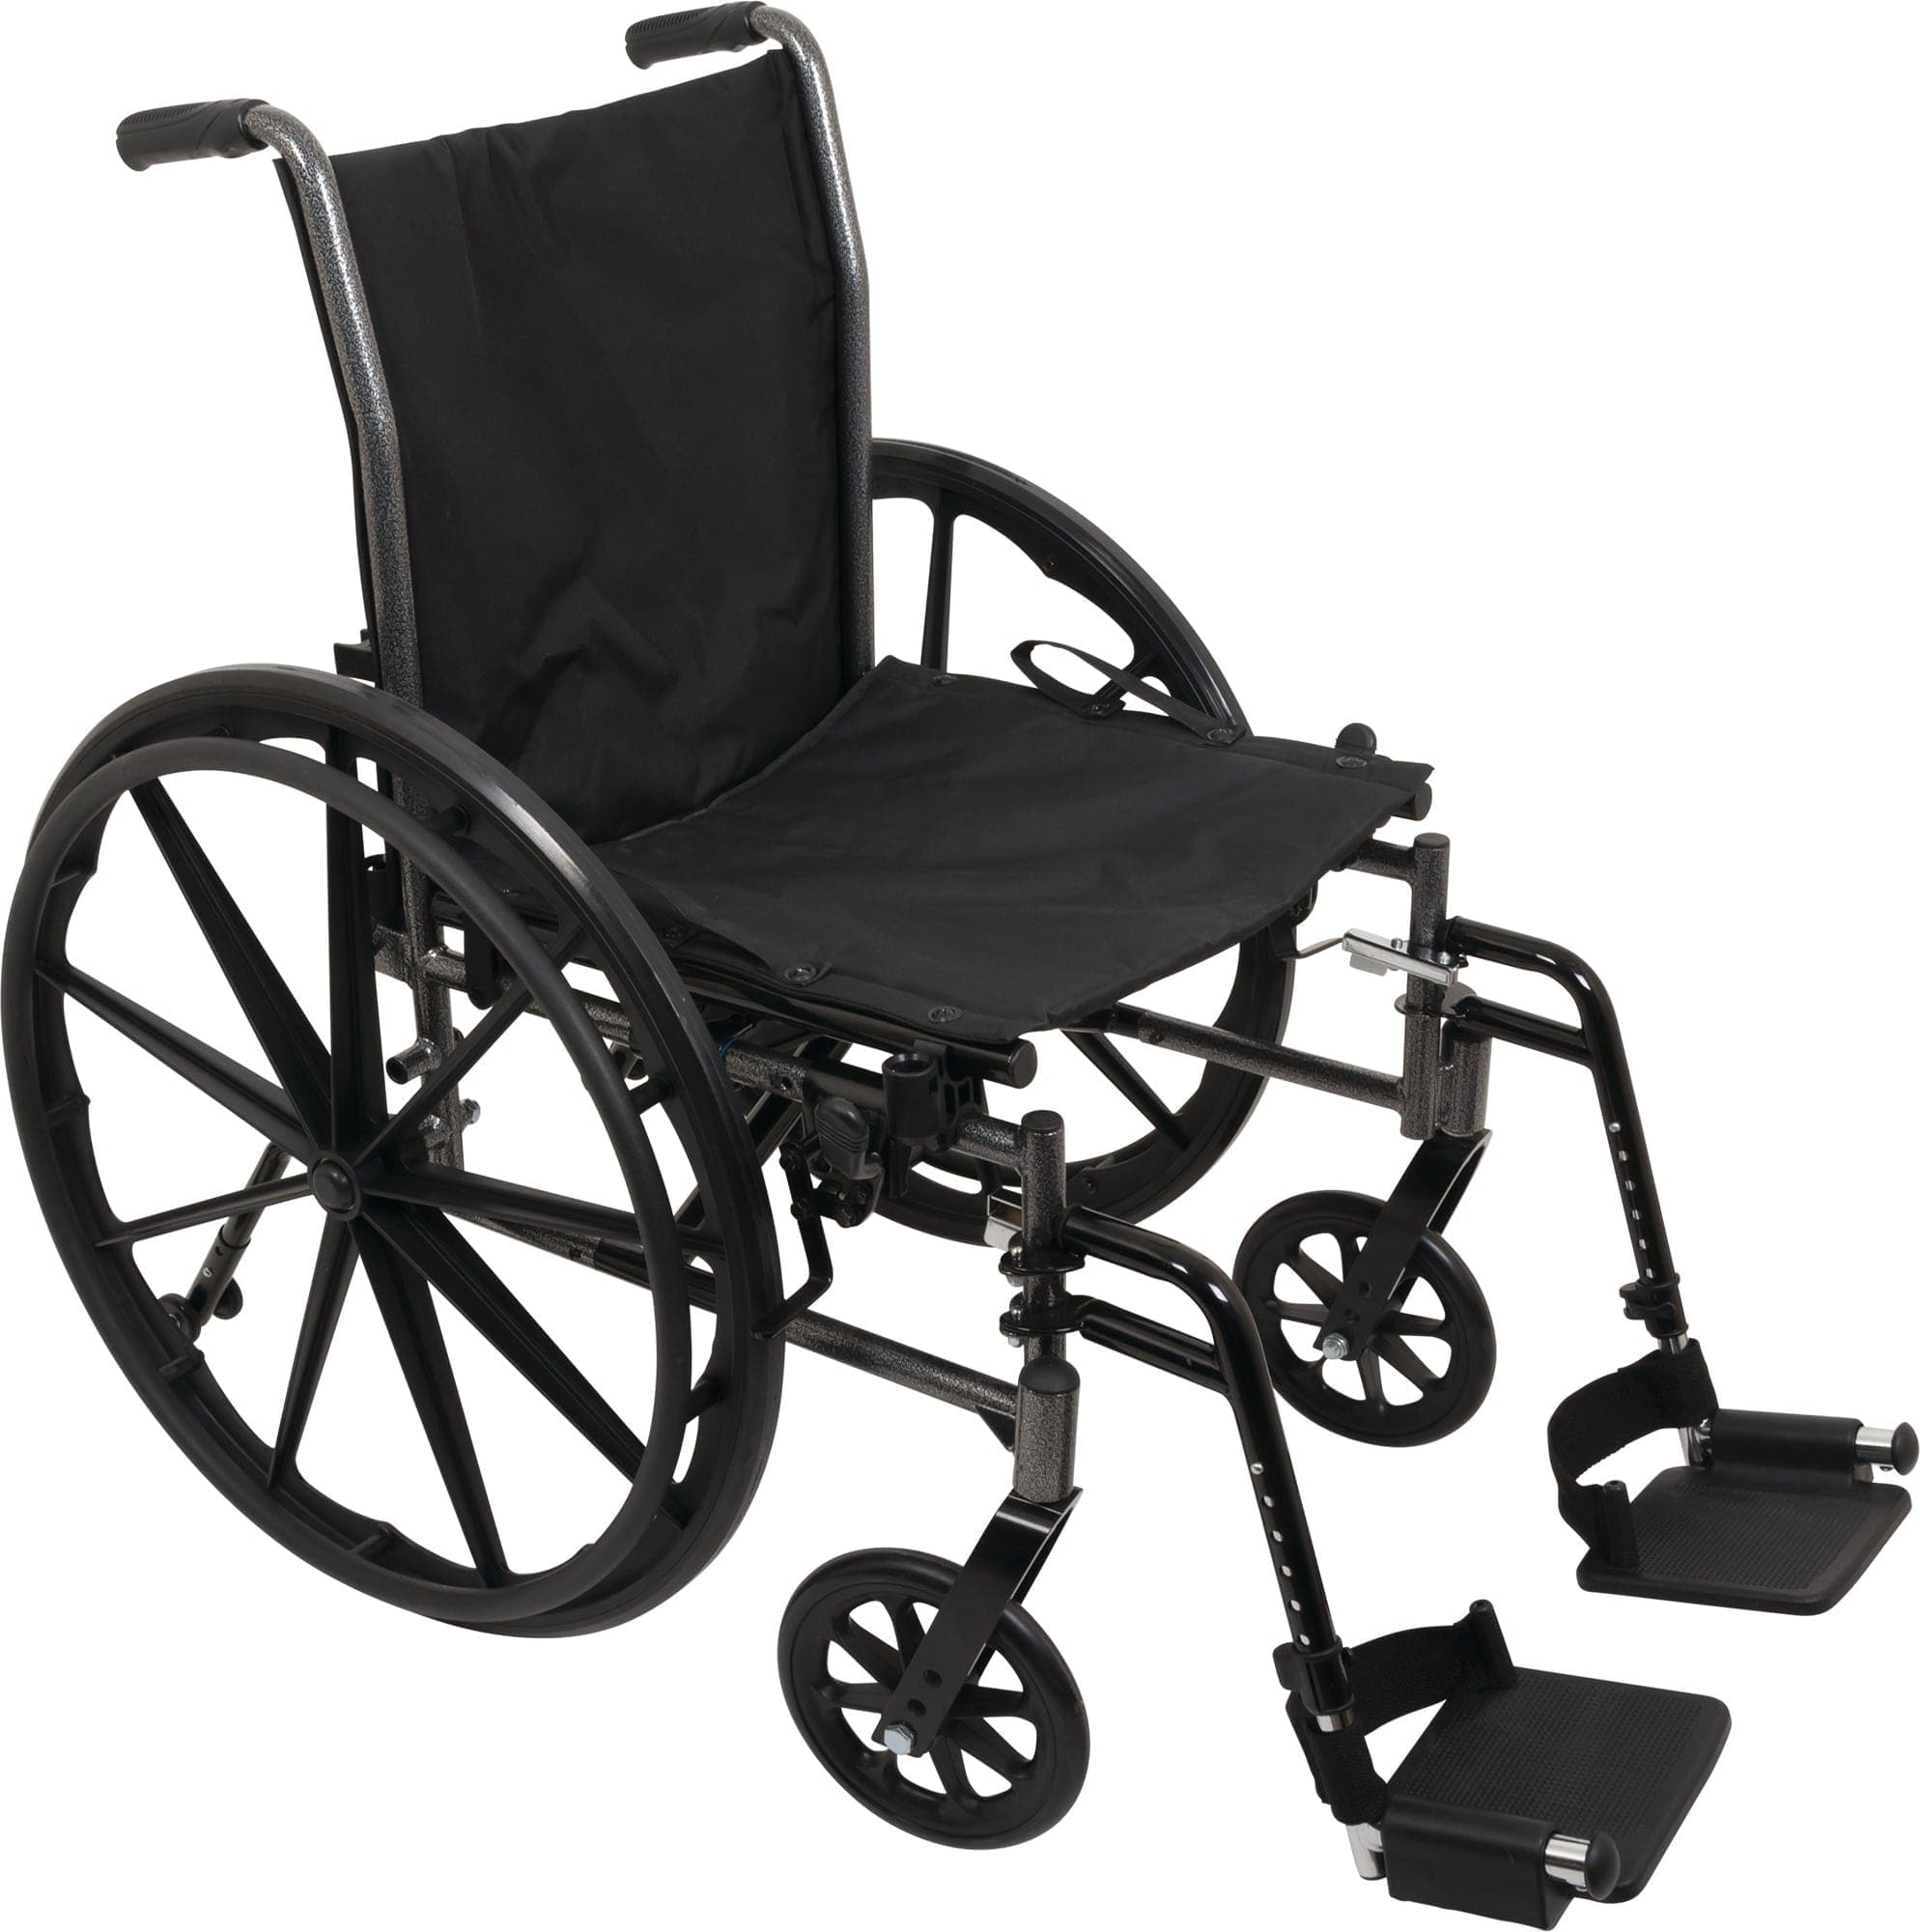 Compass Health K3 Wheelchairs Compass Health ProBasics K3 Lightweight Wheelchair with 16" x 16" Seat,